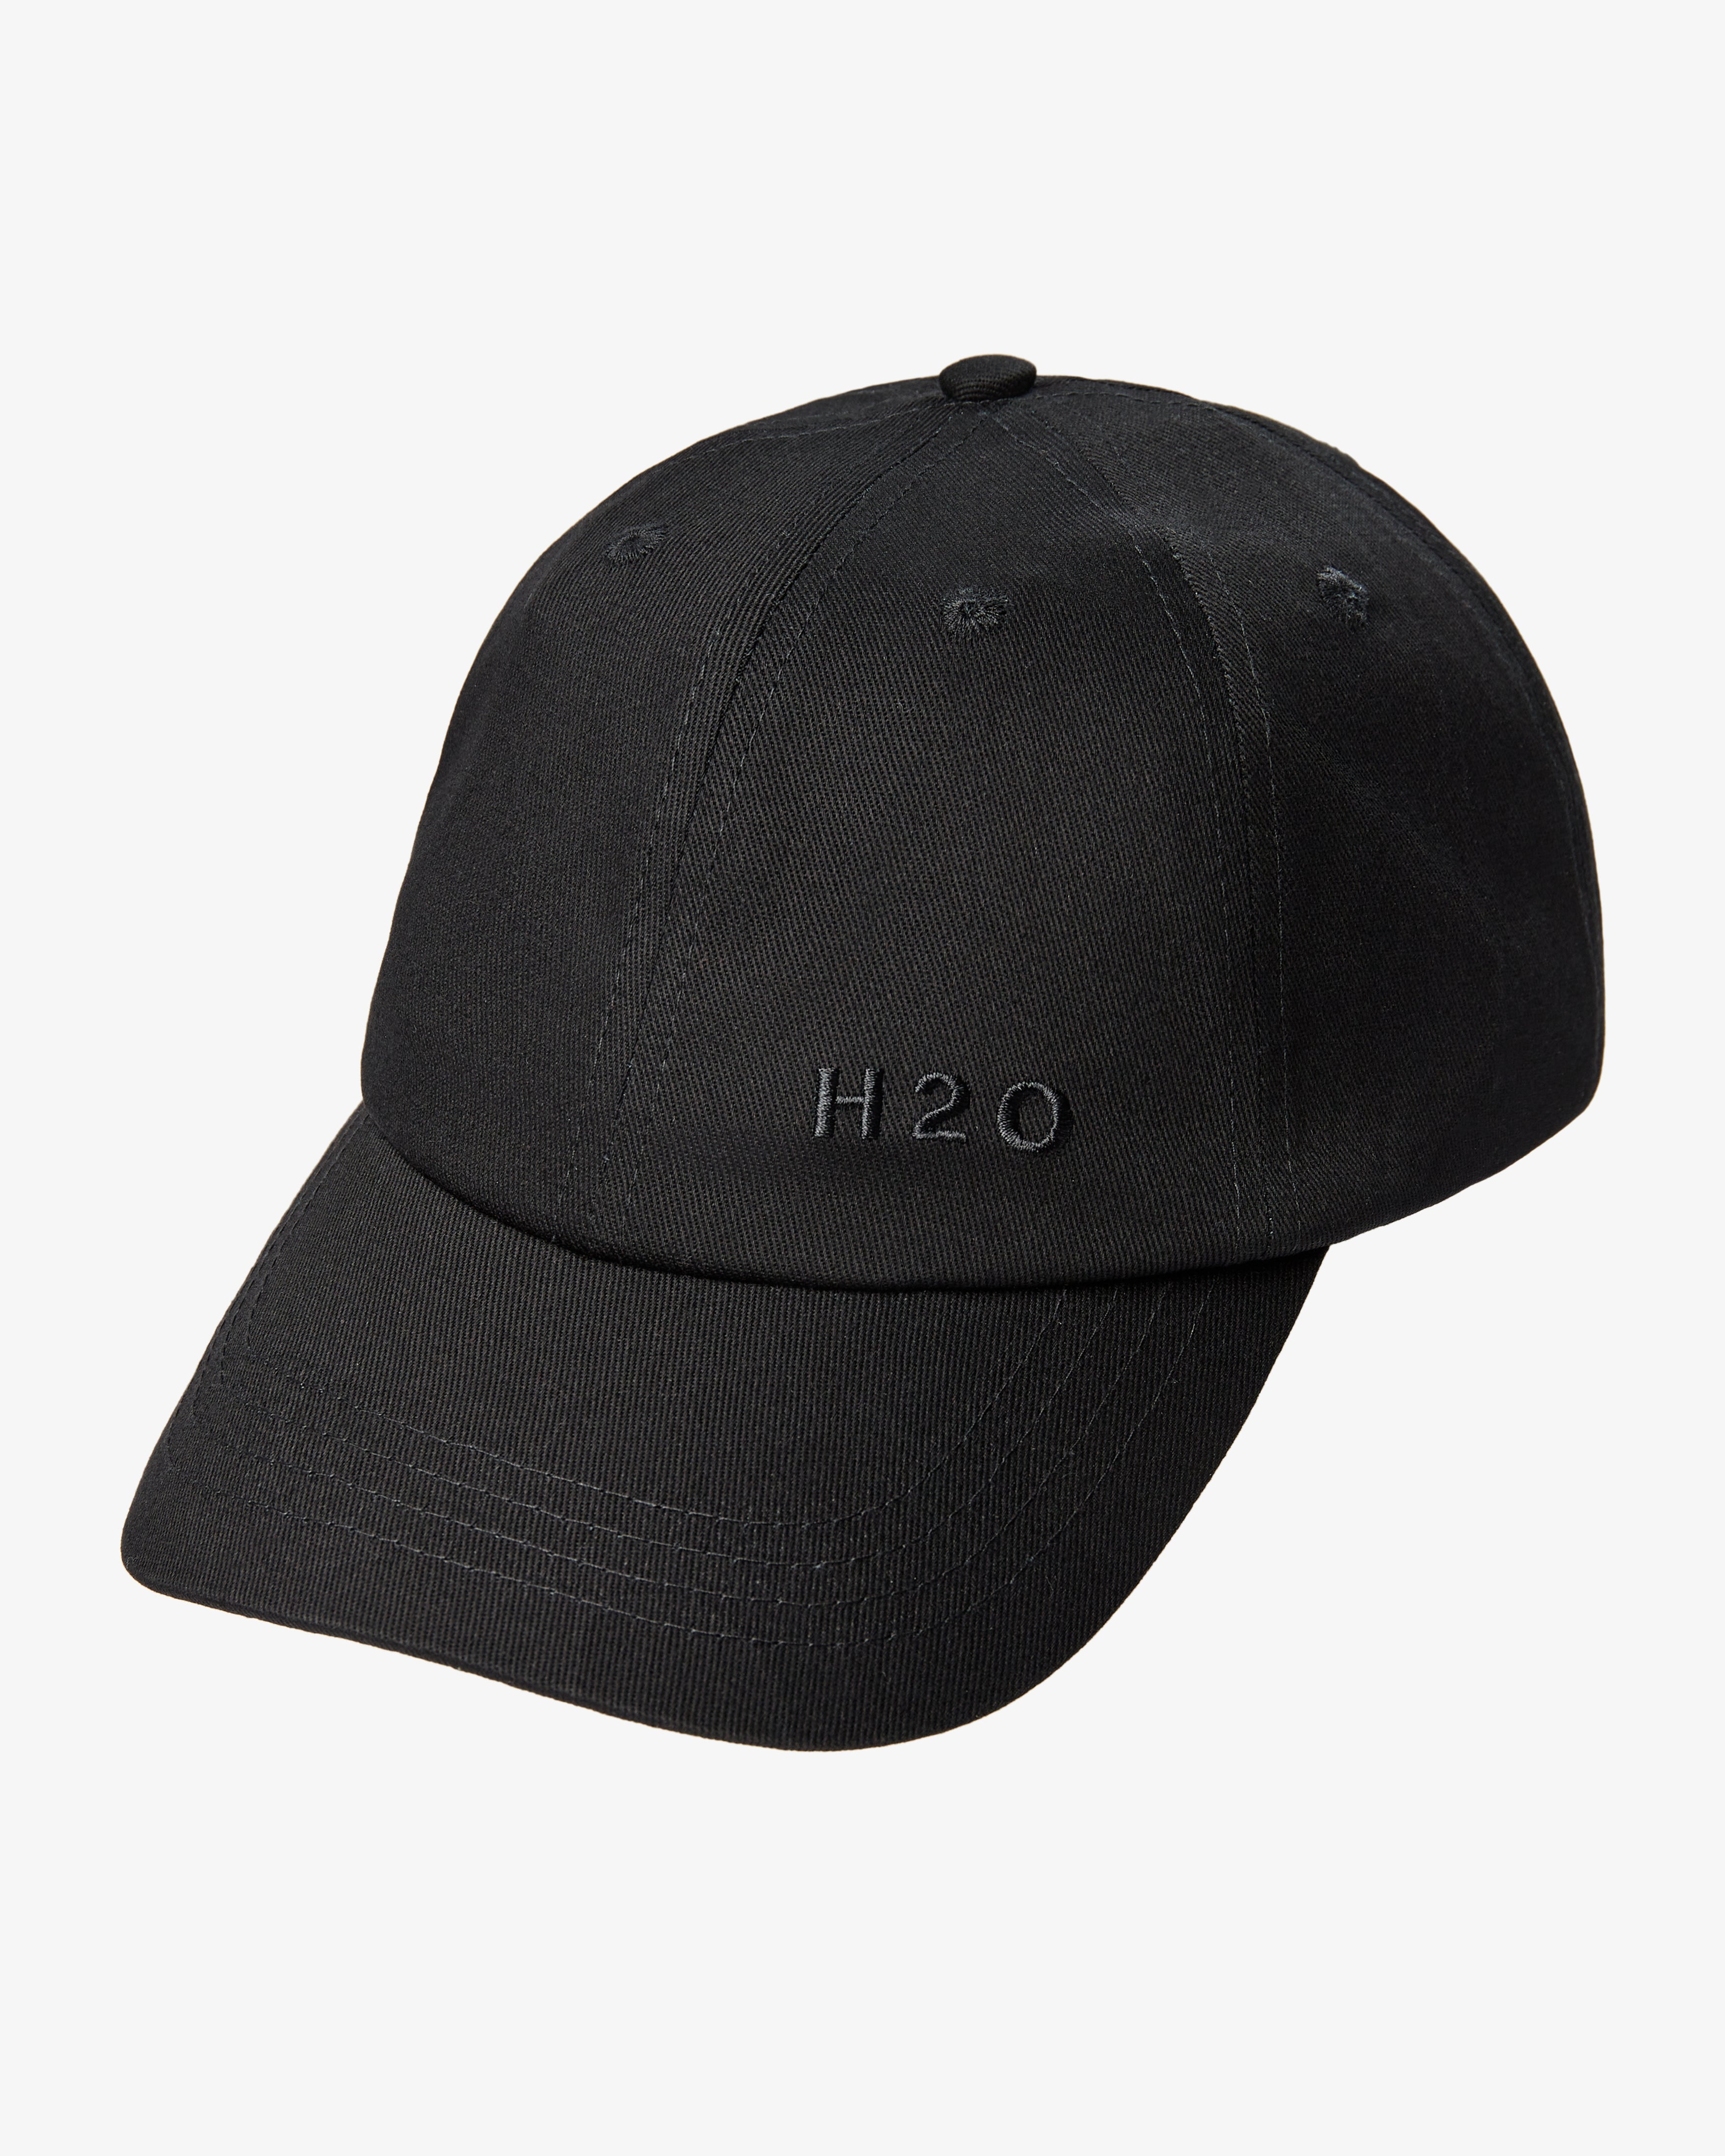 H2O Happy Cap Accessories 3500 Black